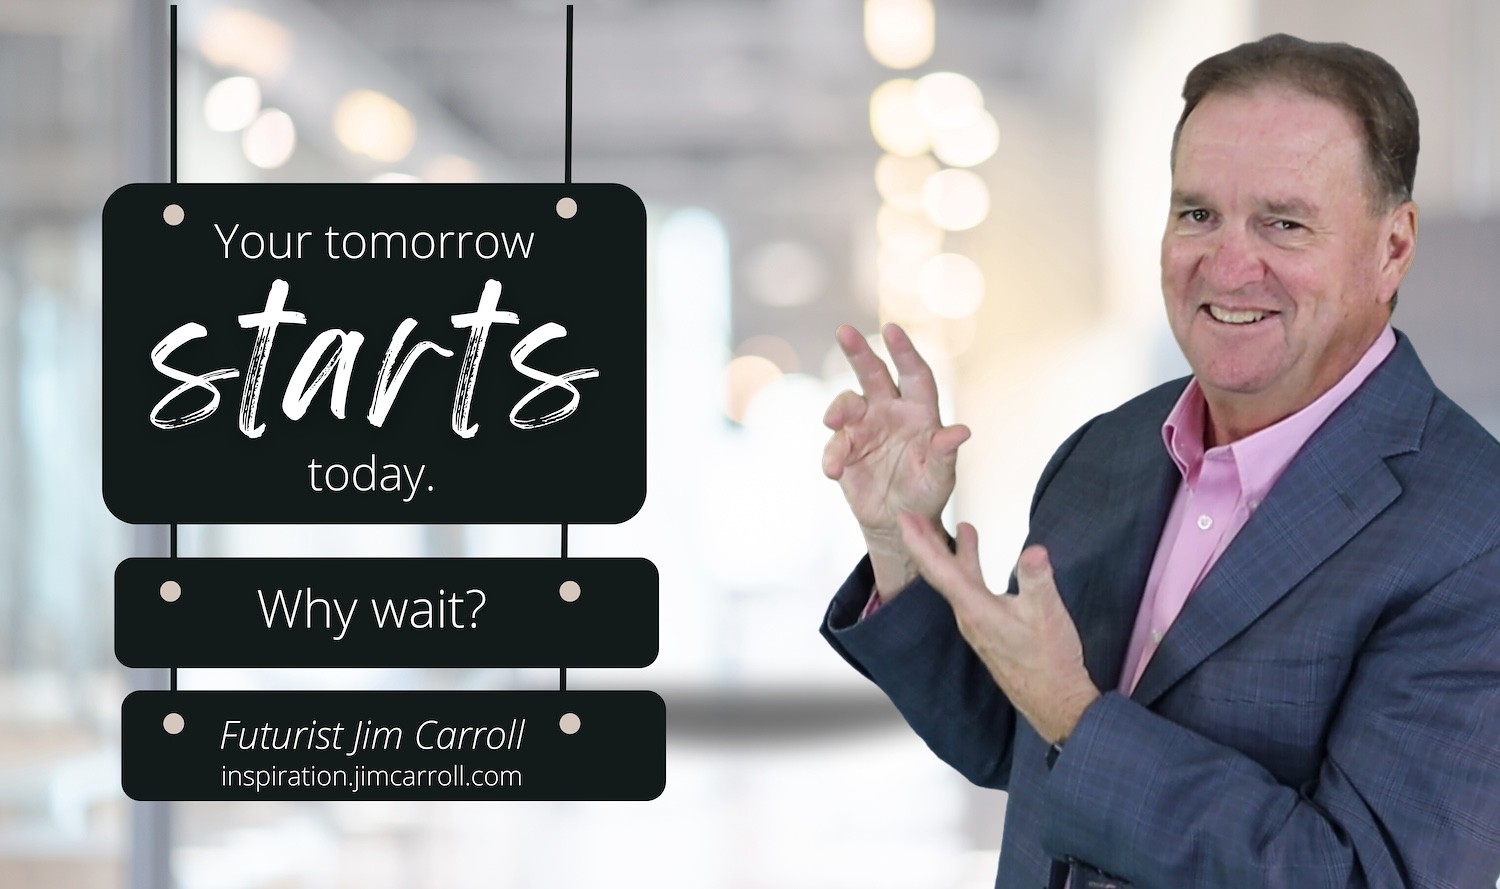 "Your tomorrow starts today. Why wait?" - Futurist Jim Carroll